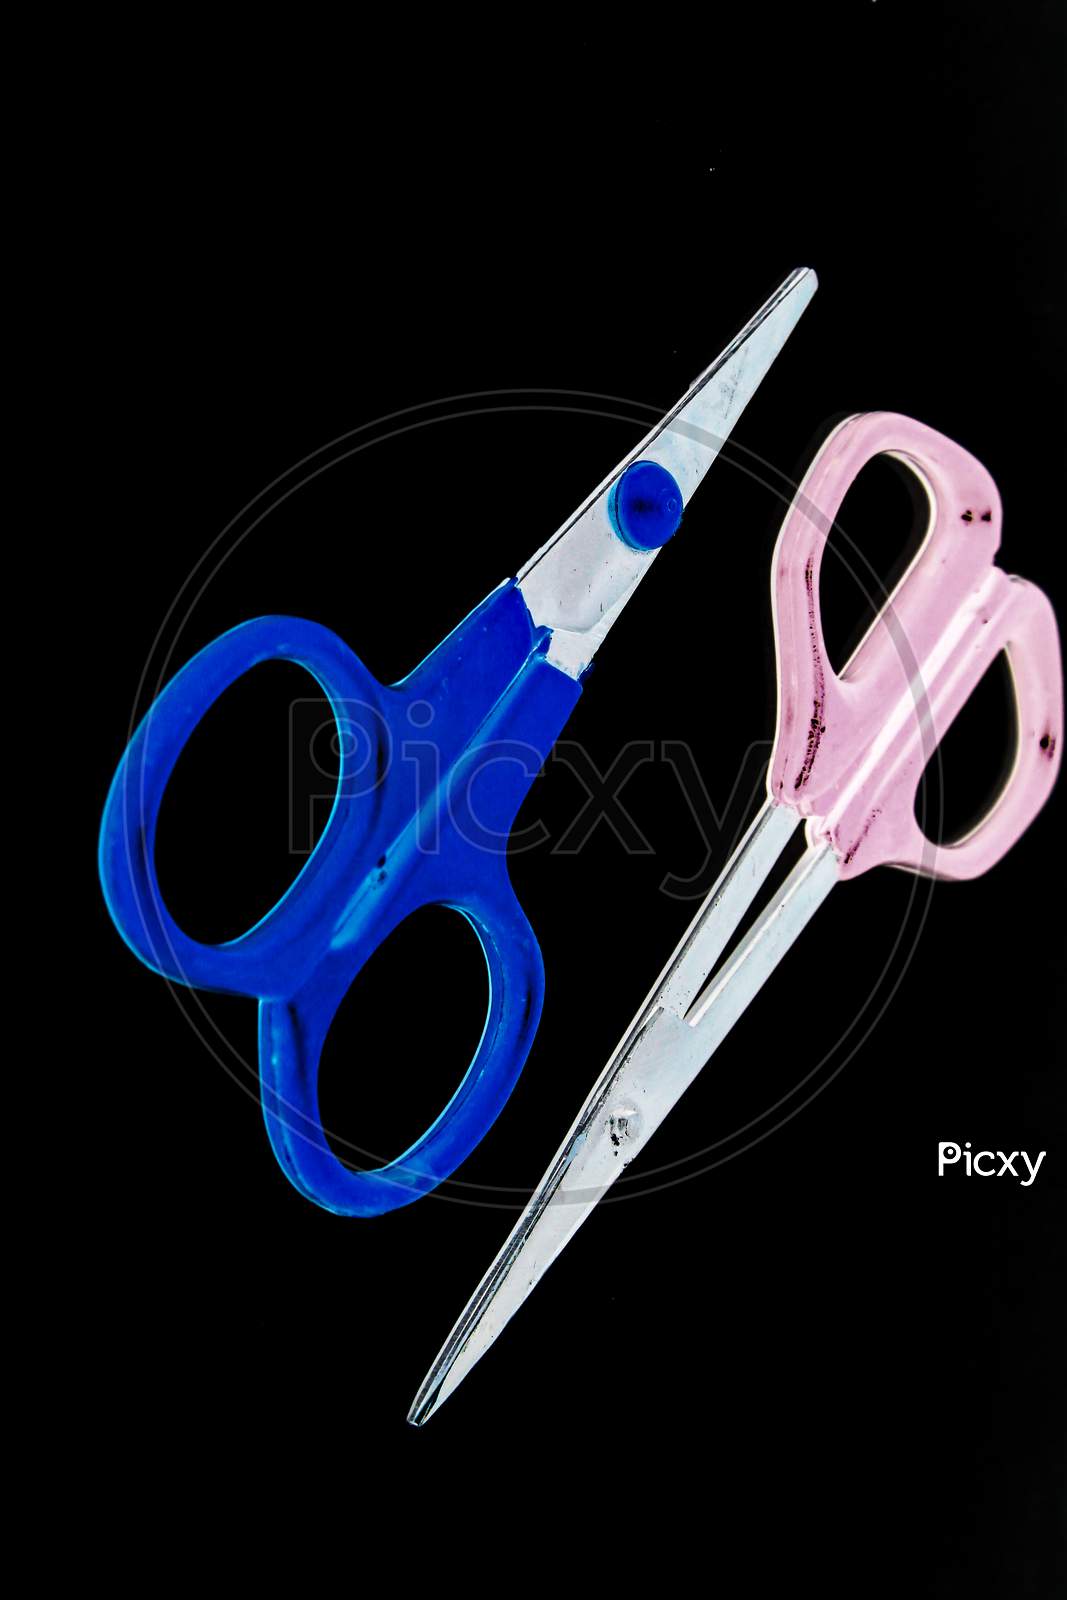 A picture of scissors